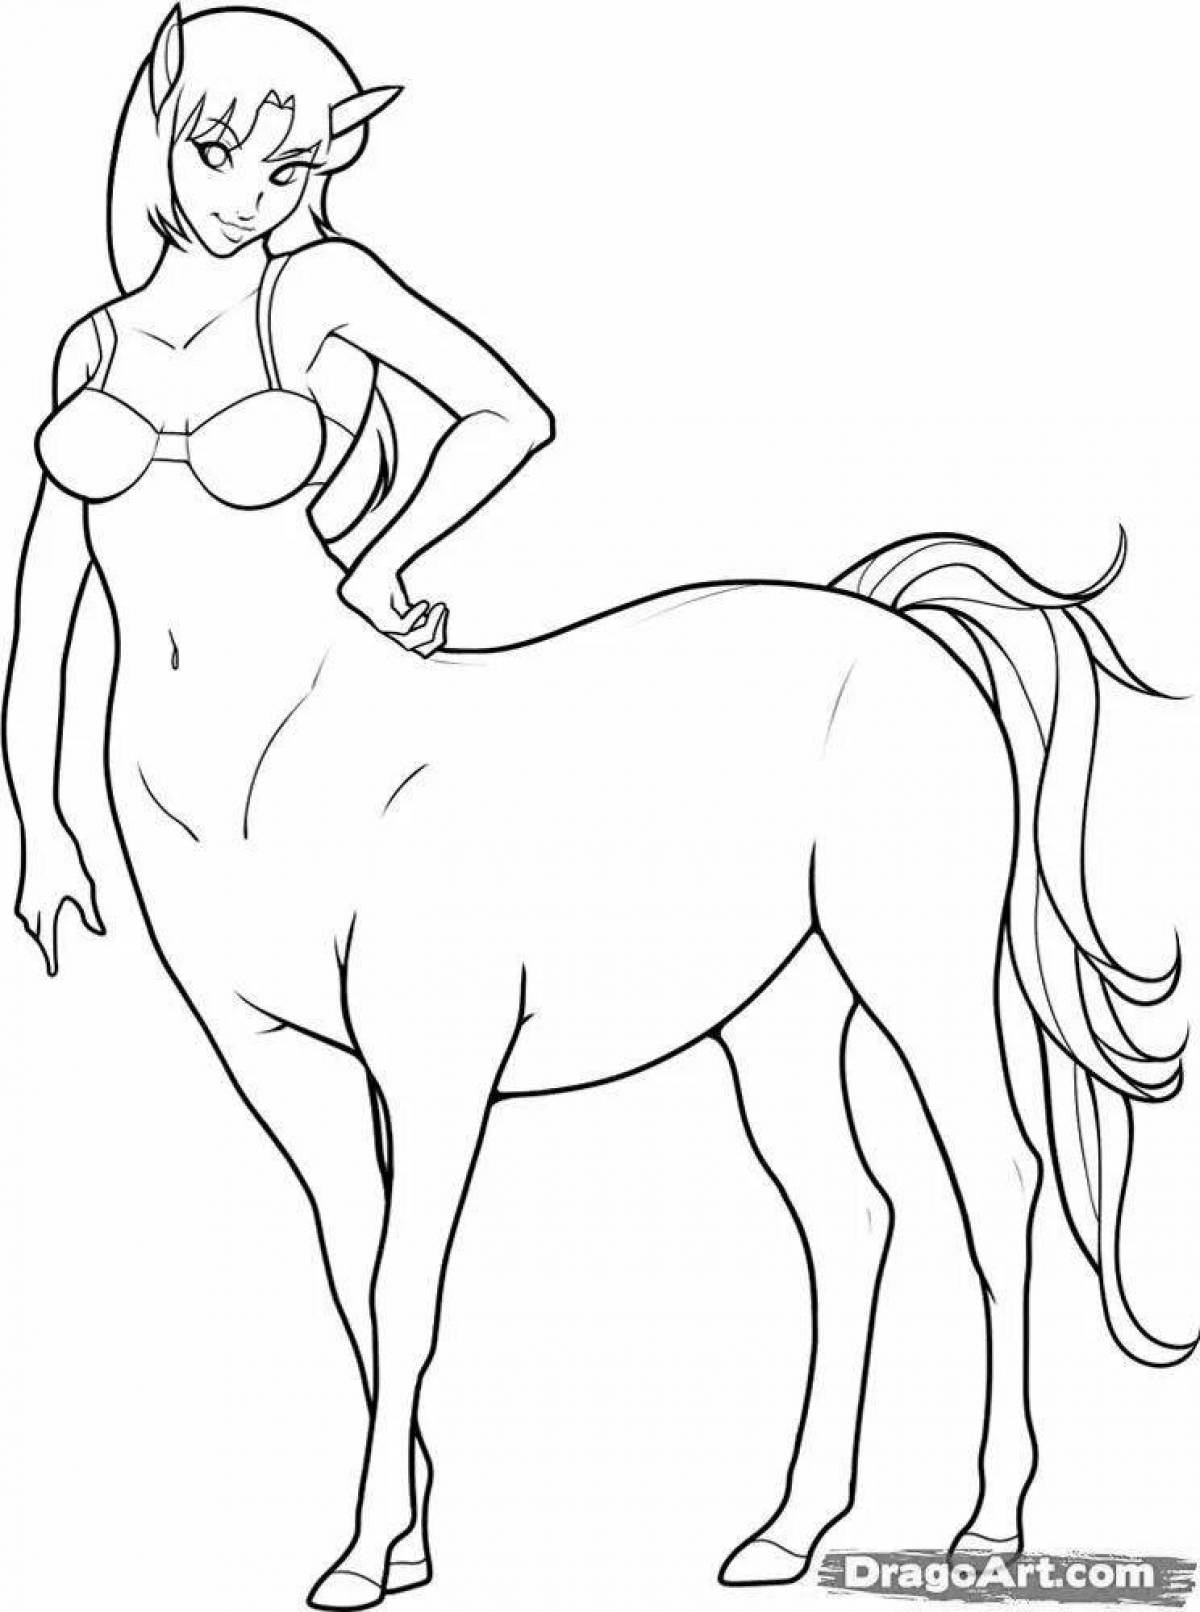 Exalted coloring centaur